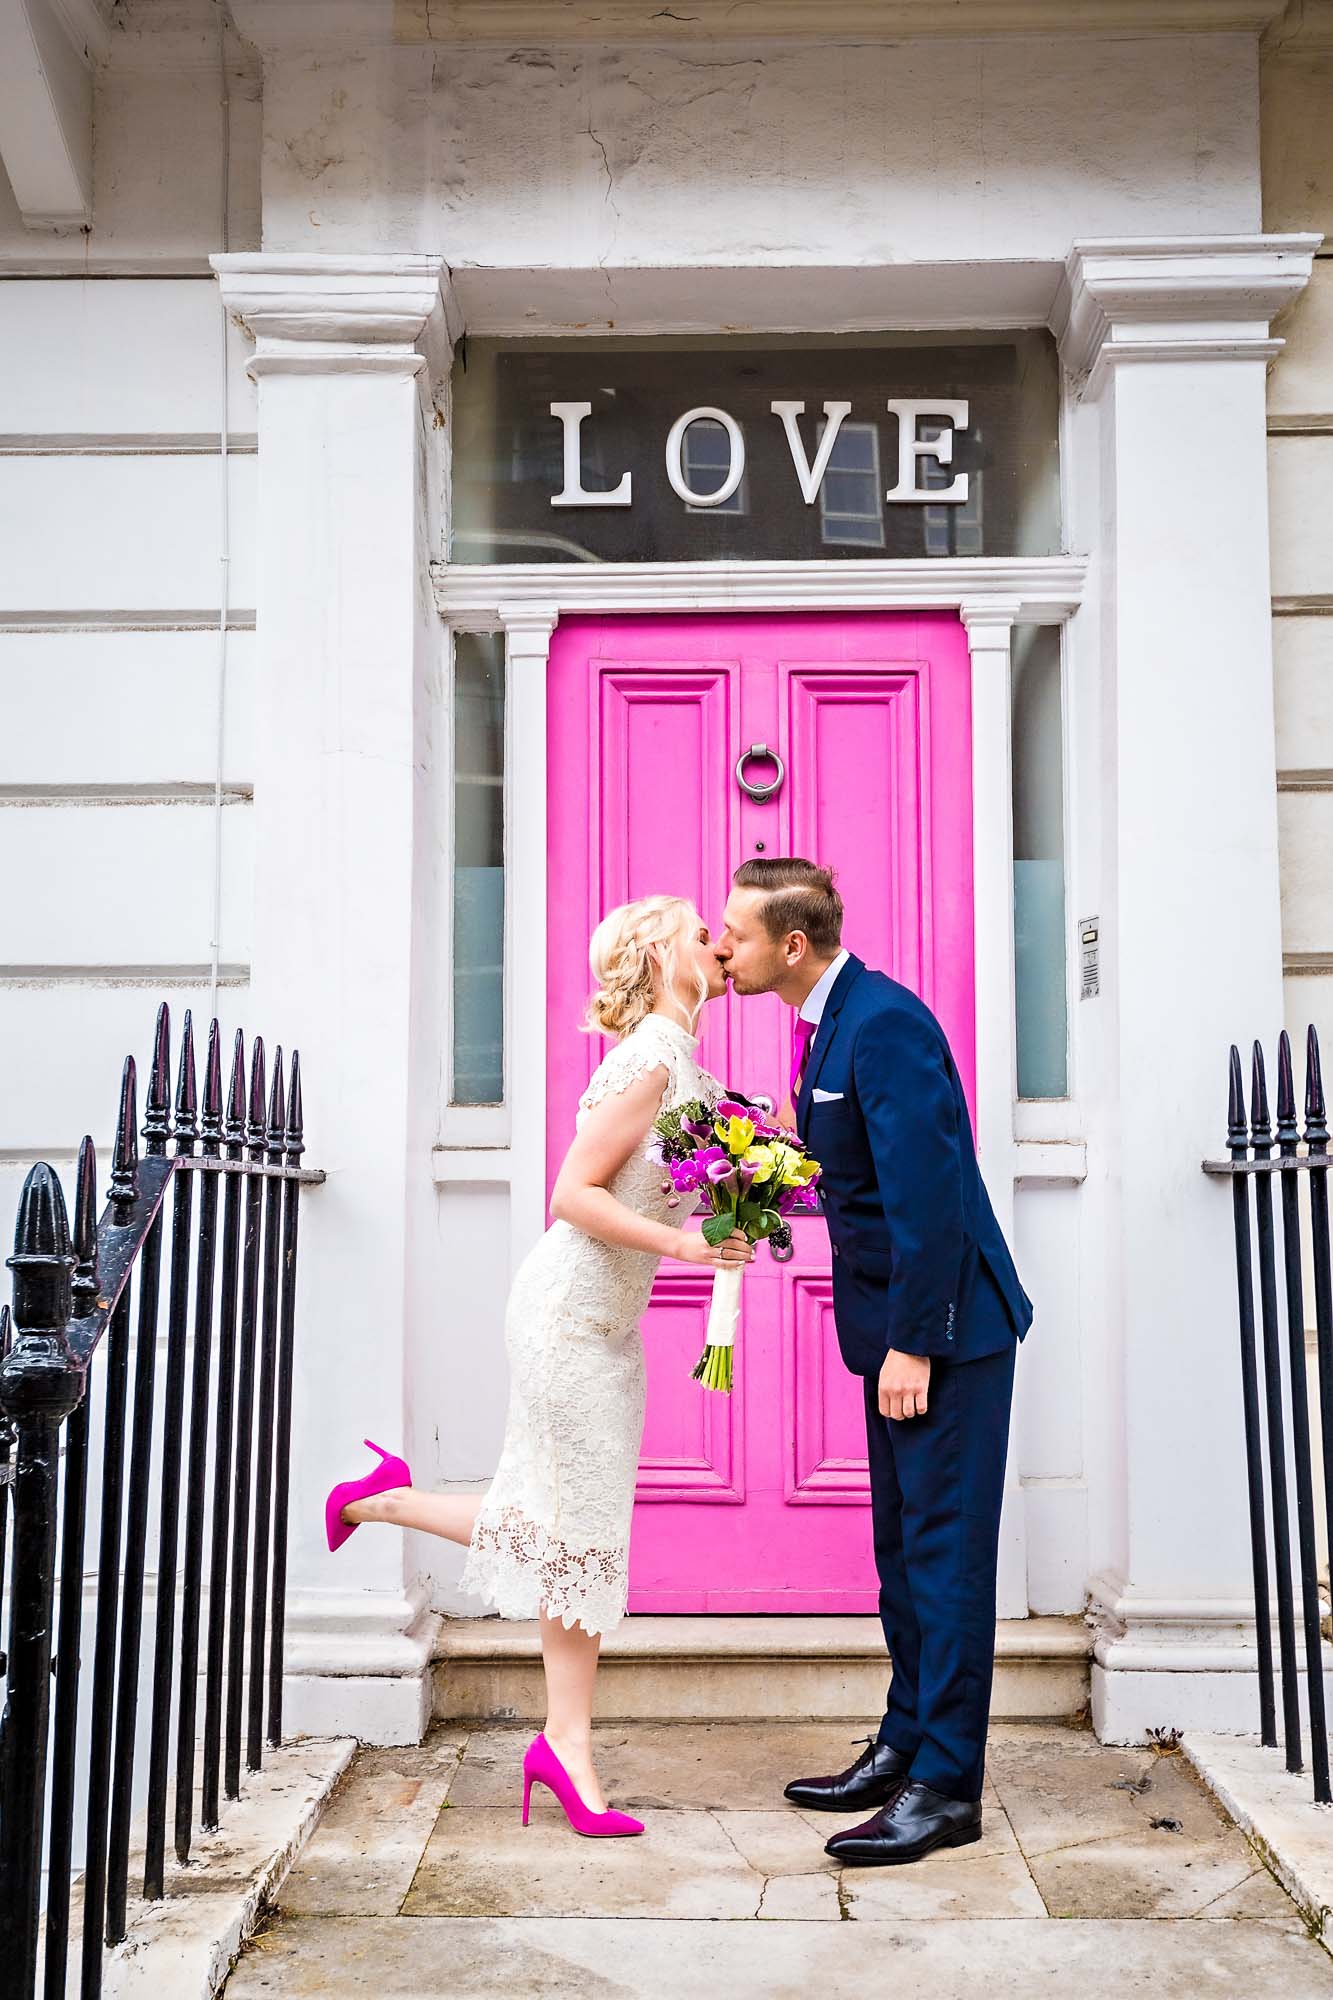 Bride in pink shoes kisses smart groom in front of pink door with 'Love' written above it